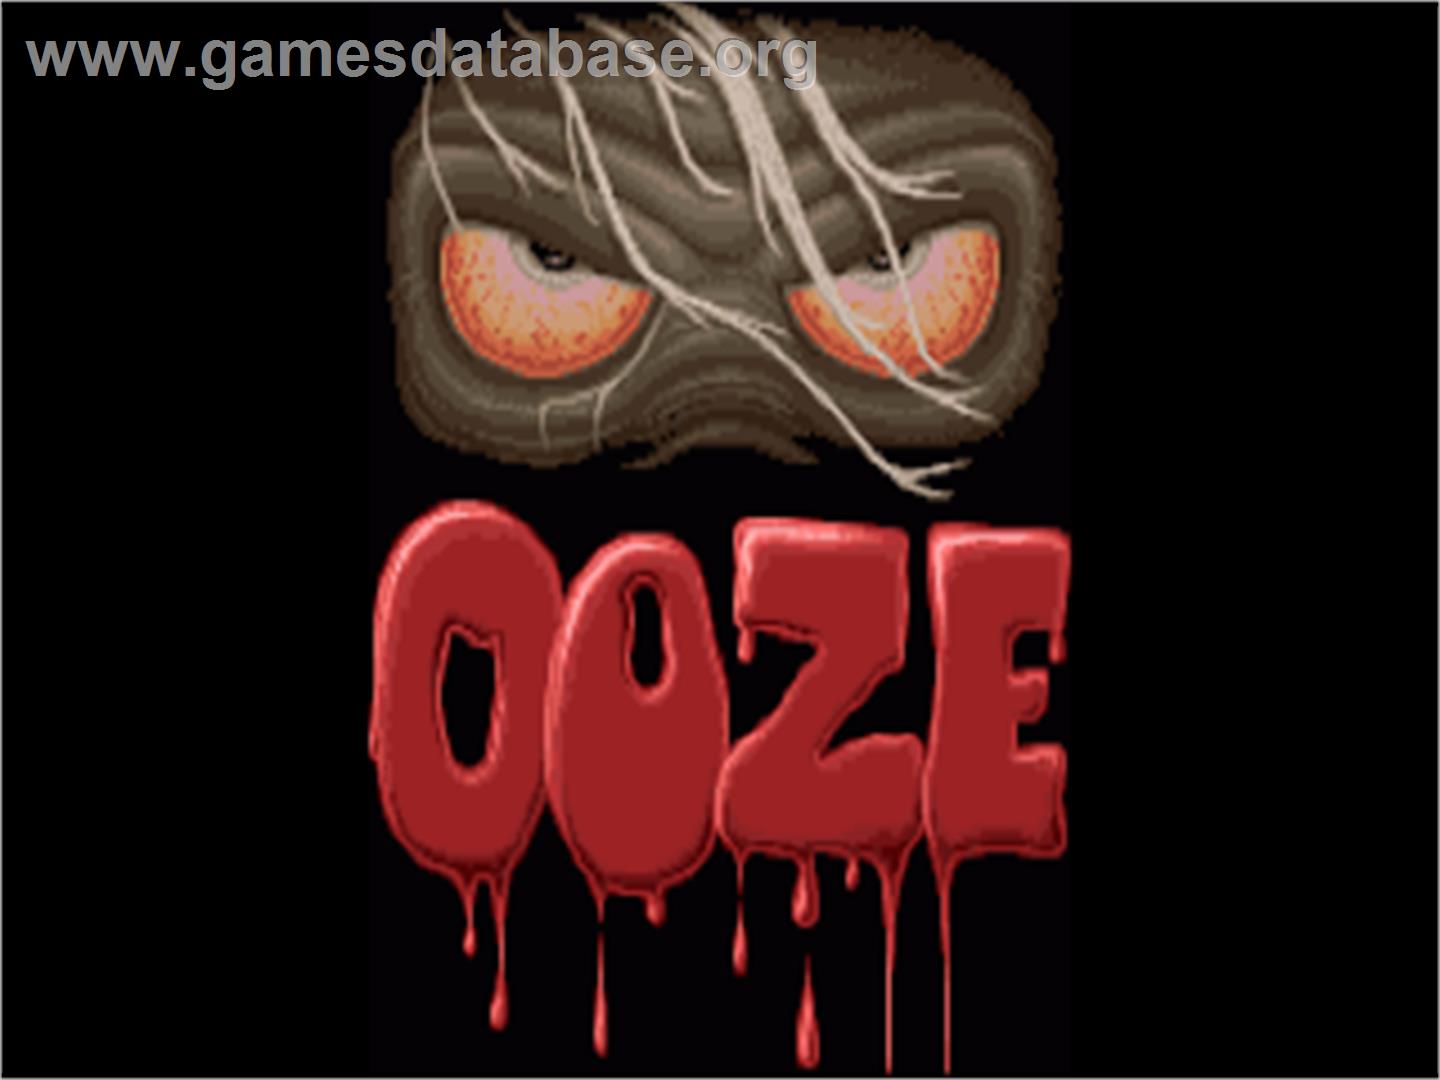 Ooze: Creepy Nites - Commodore Amiga - Artwork - Title Screen